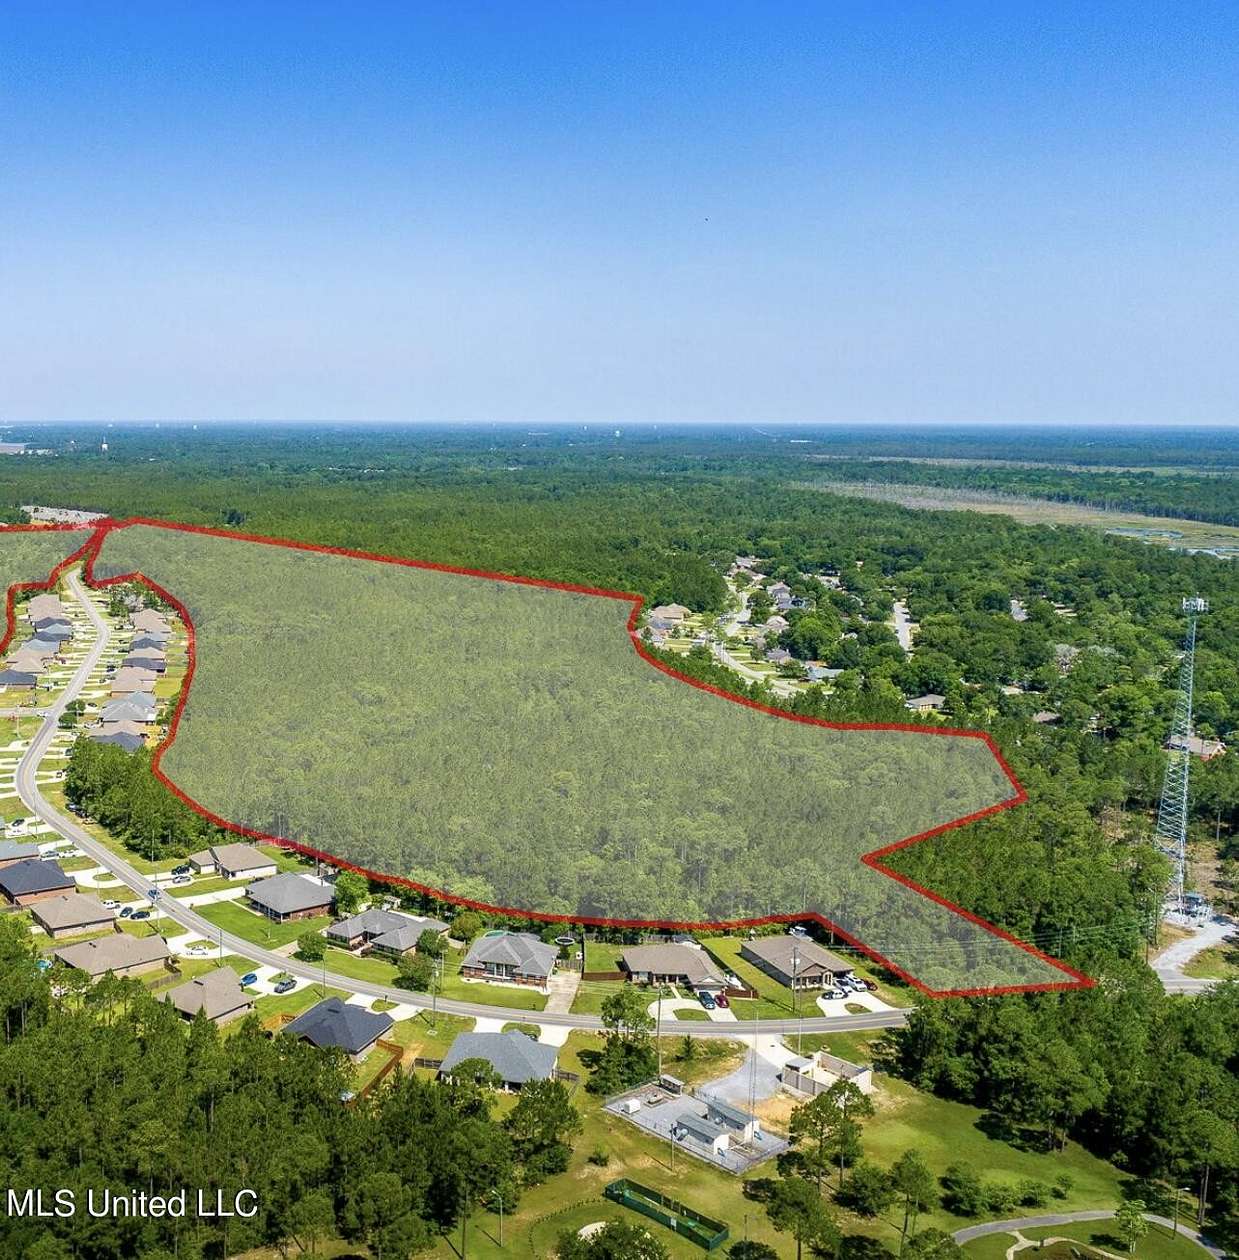 70.8 Acres of Land for Sale in Ocean Springs, Mississippi